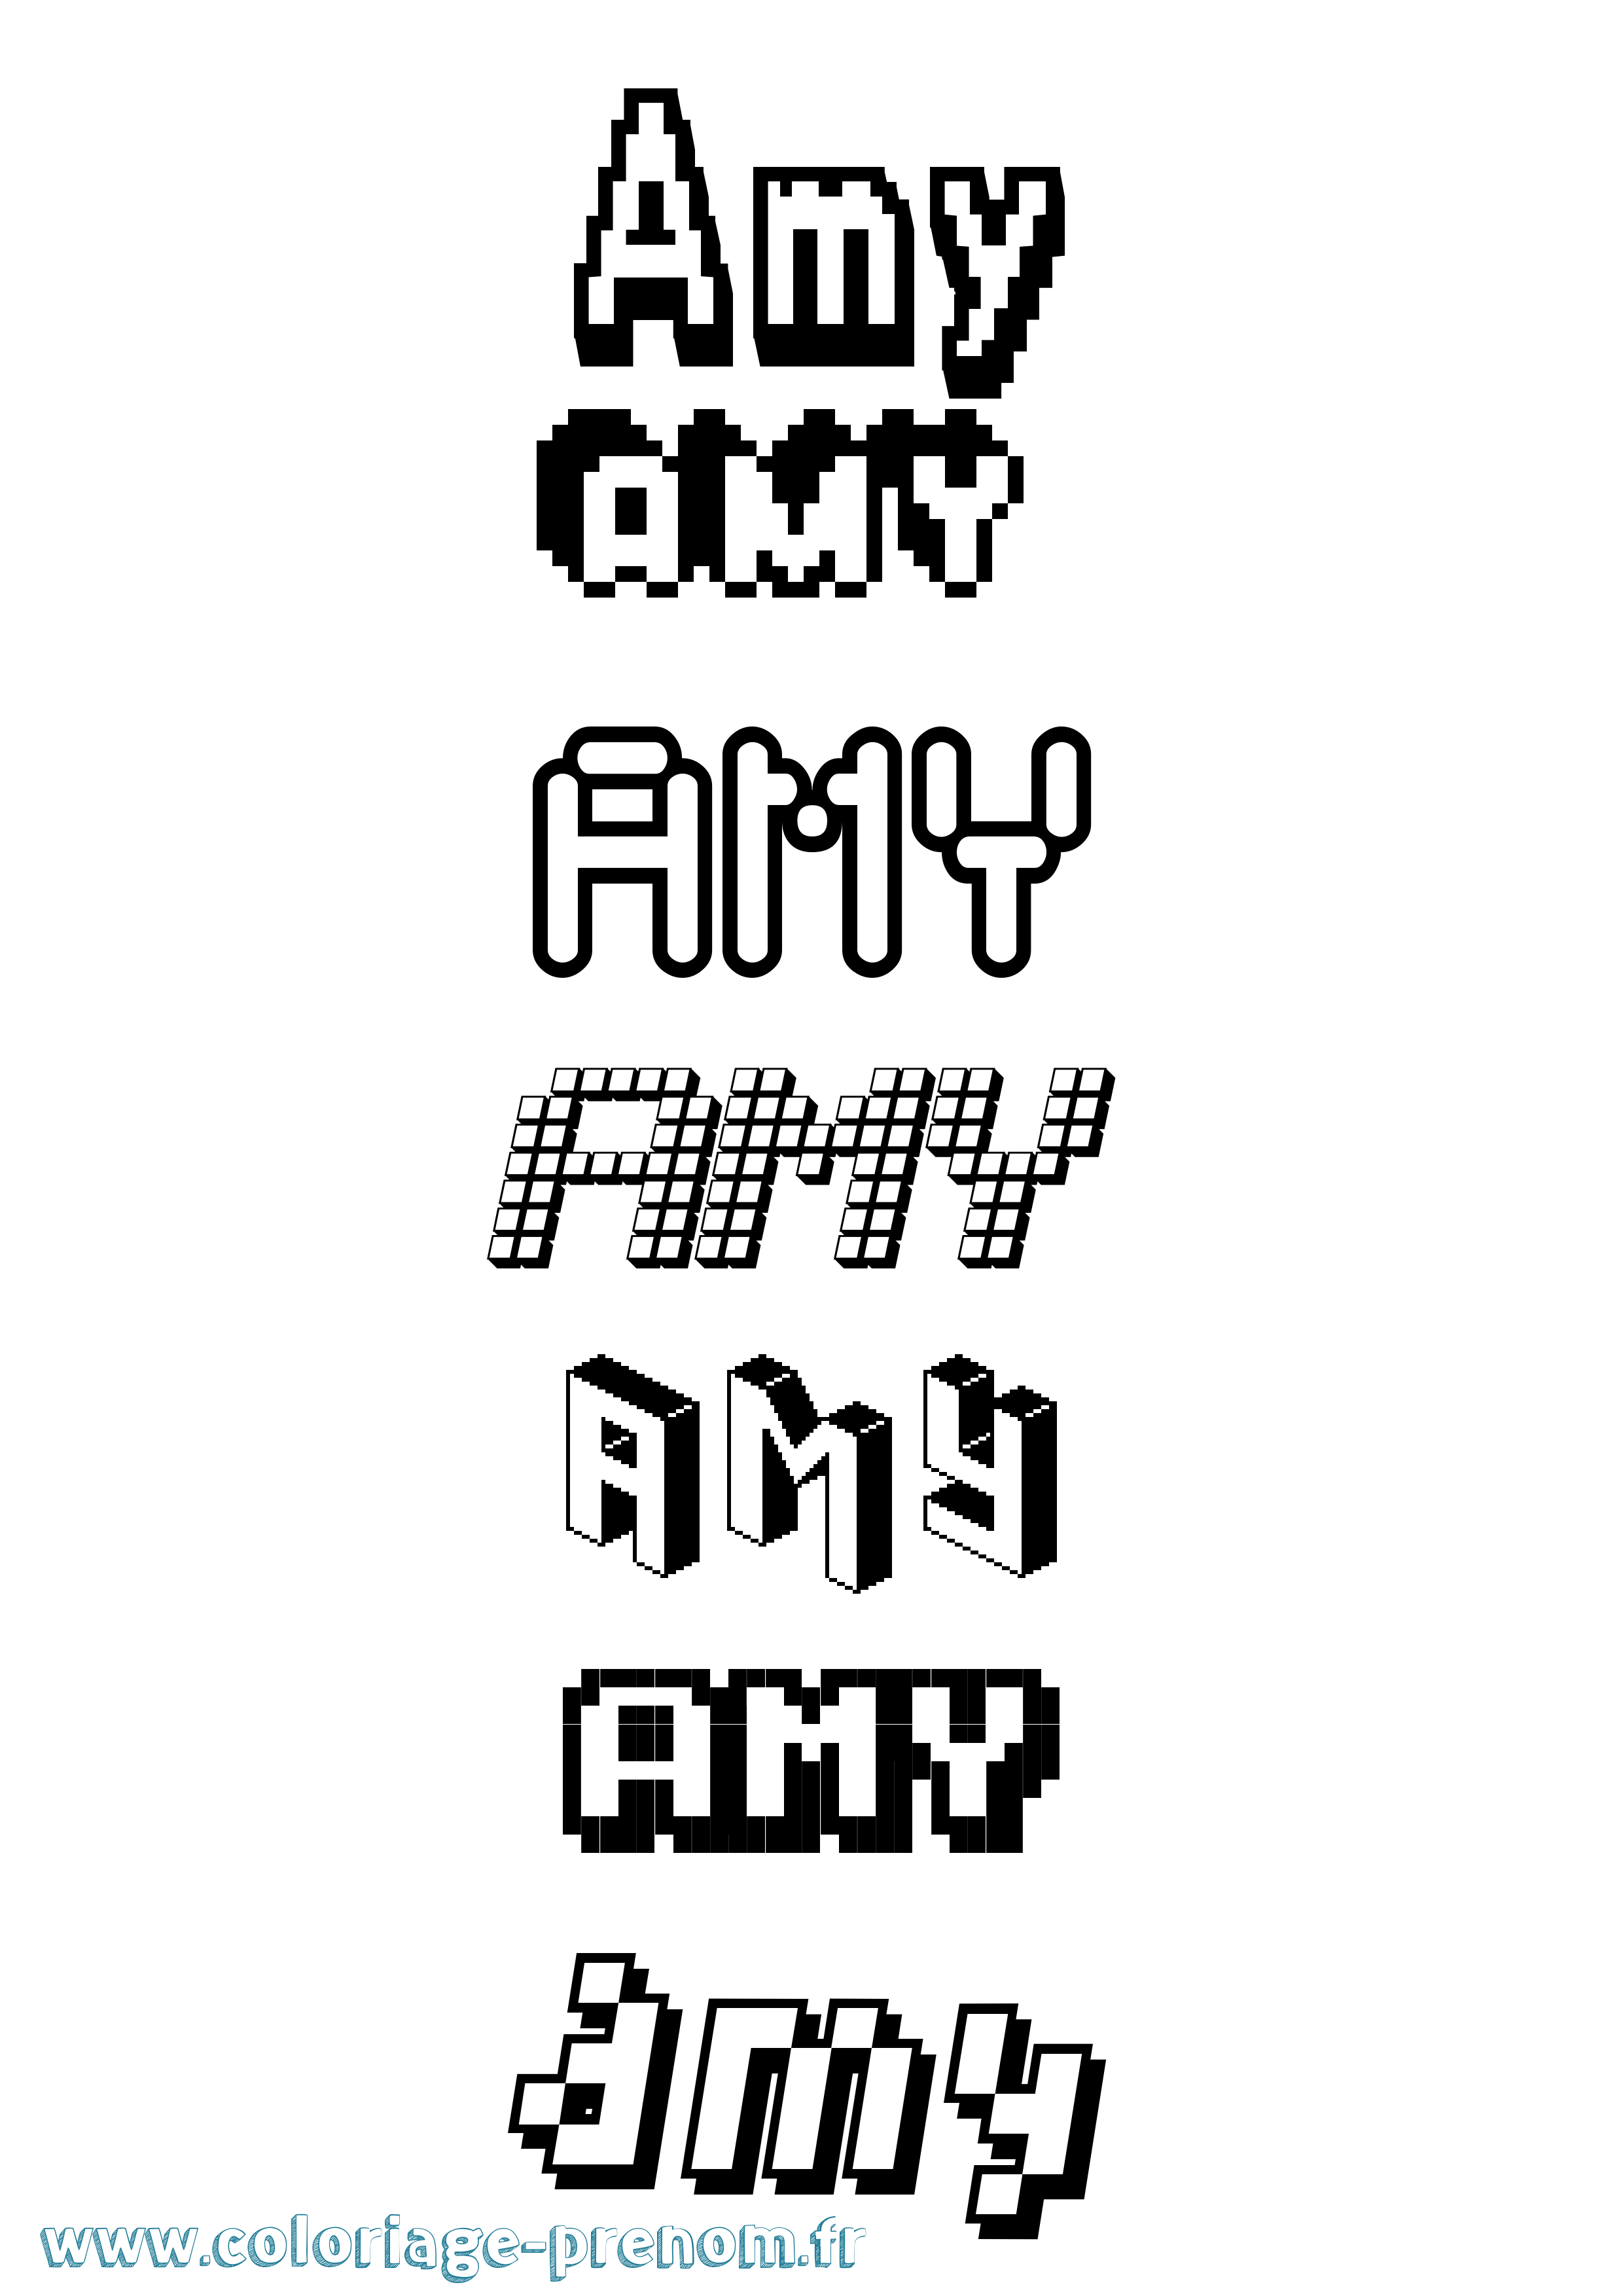 Coloriage prénom Amy